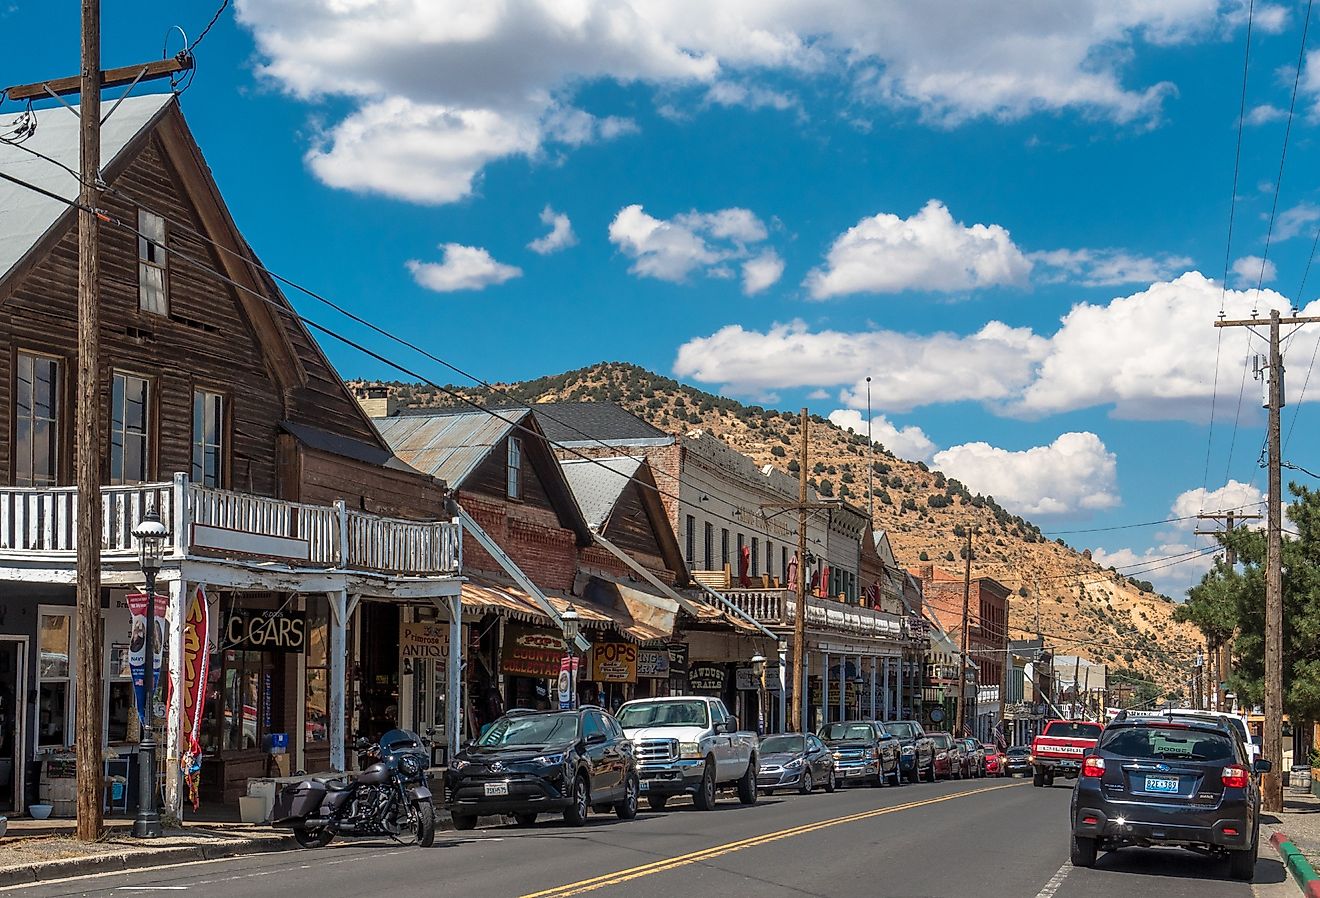 Historic Main Street, Virginia City, Nevada. Image credit M. Vinuesa via Shutterstock.com